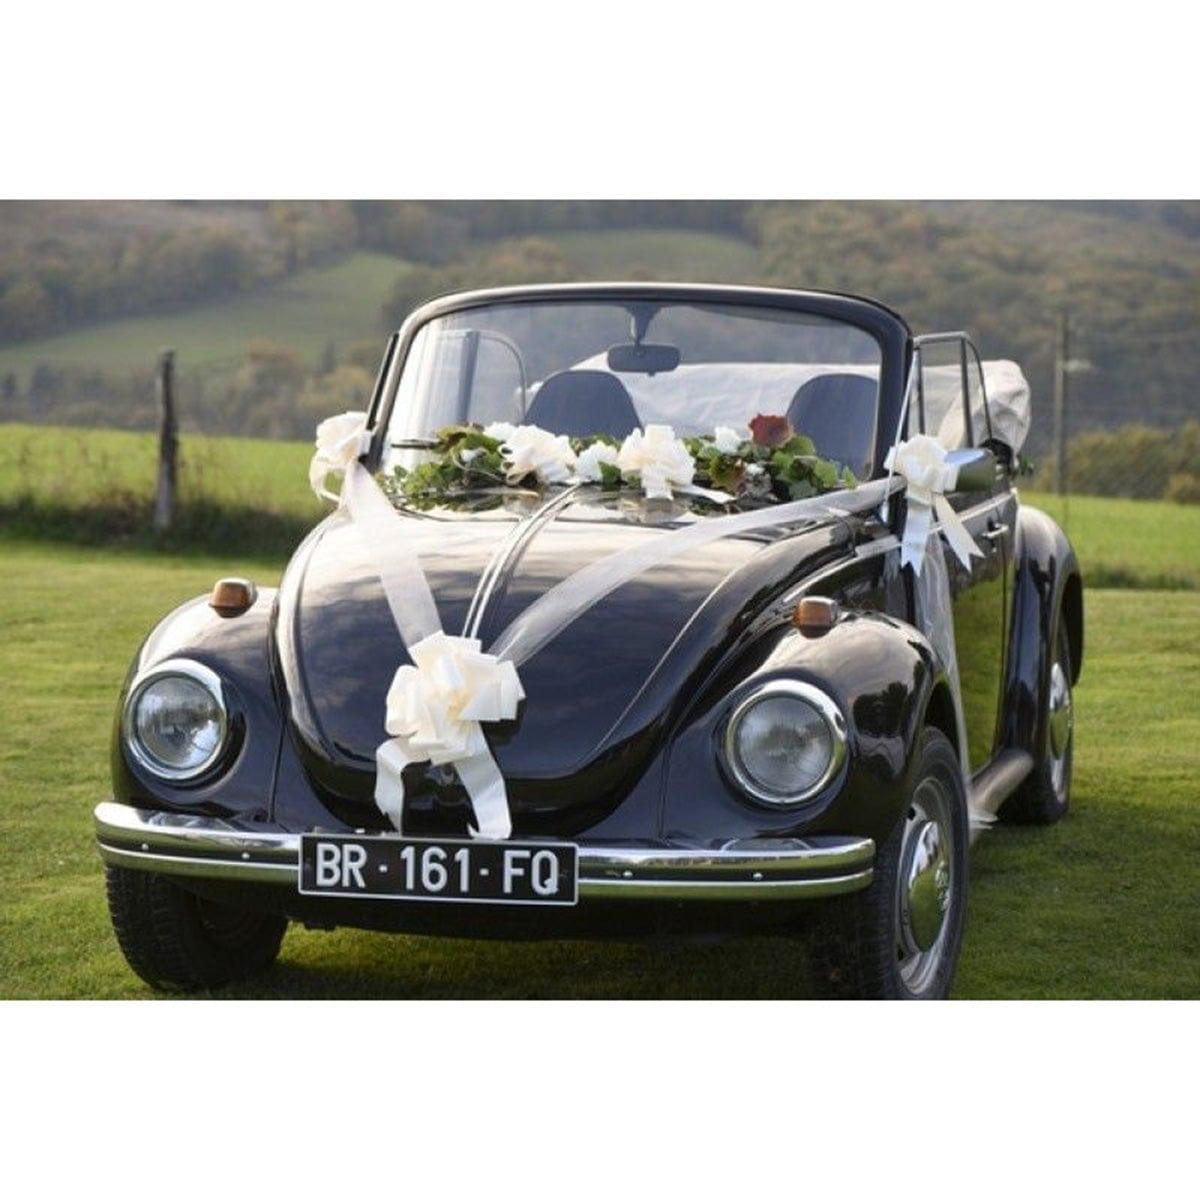 SANTEX Wedding White Wedding Car Decoration Kit